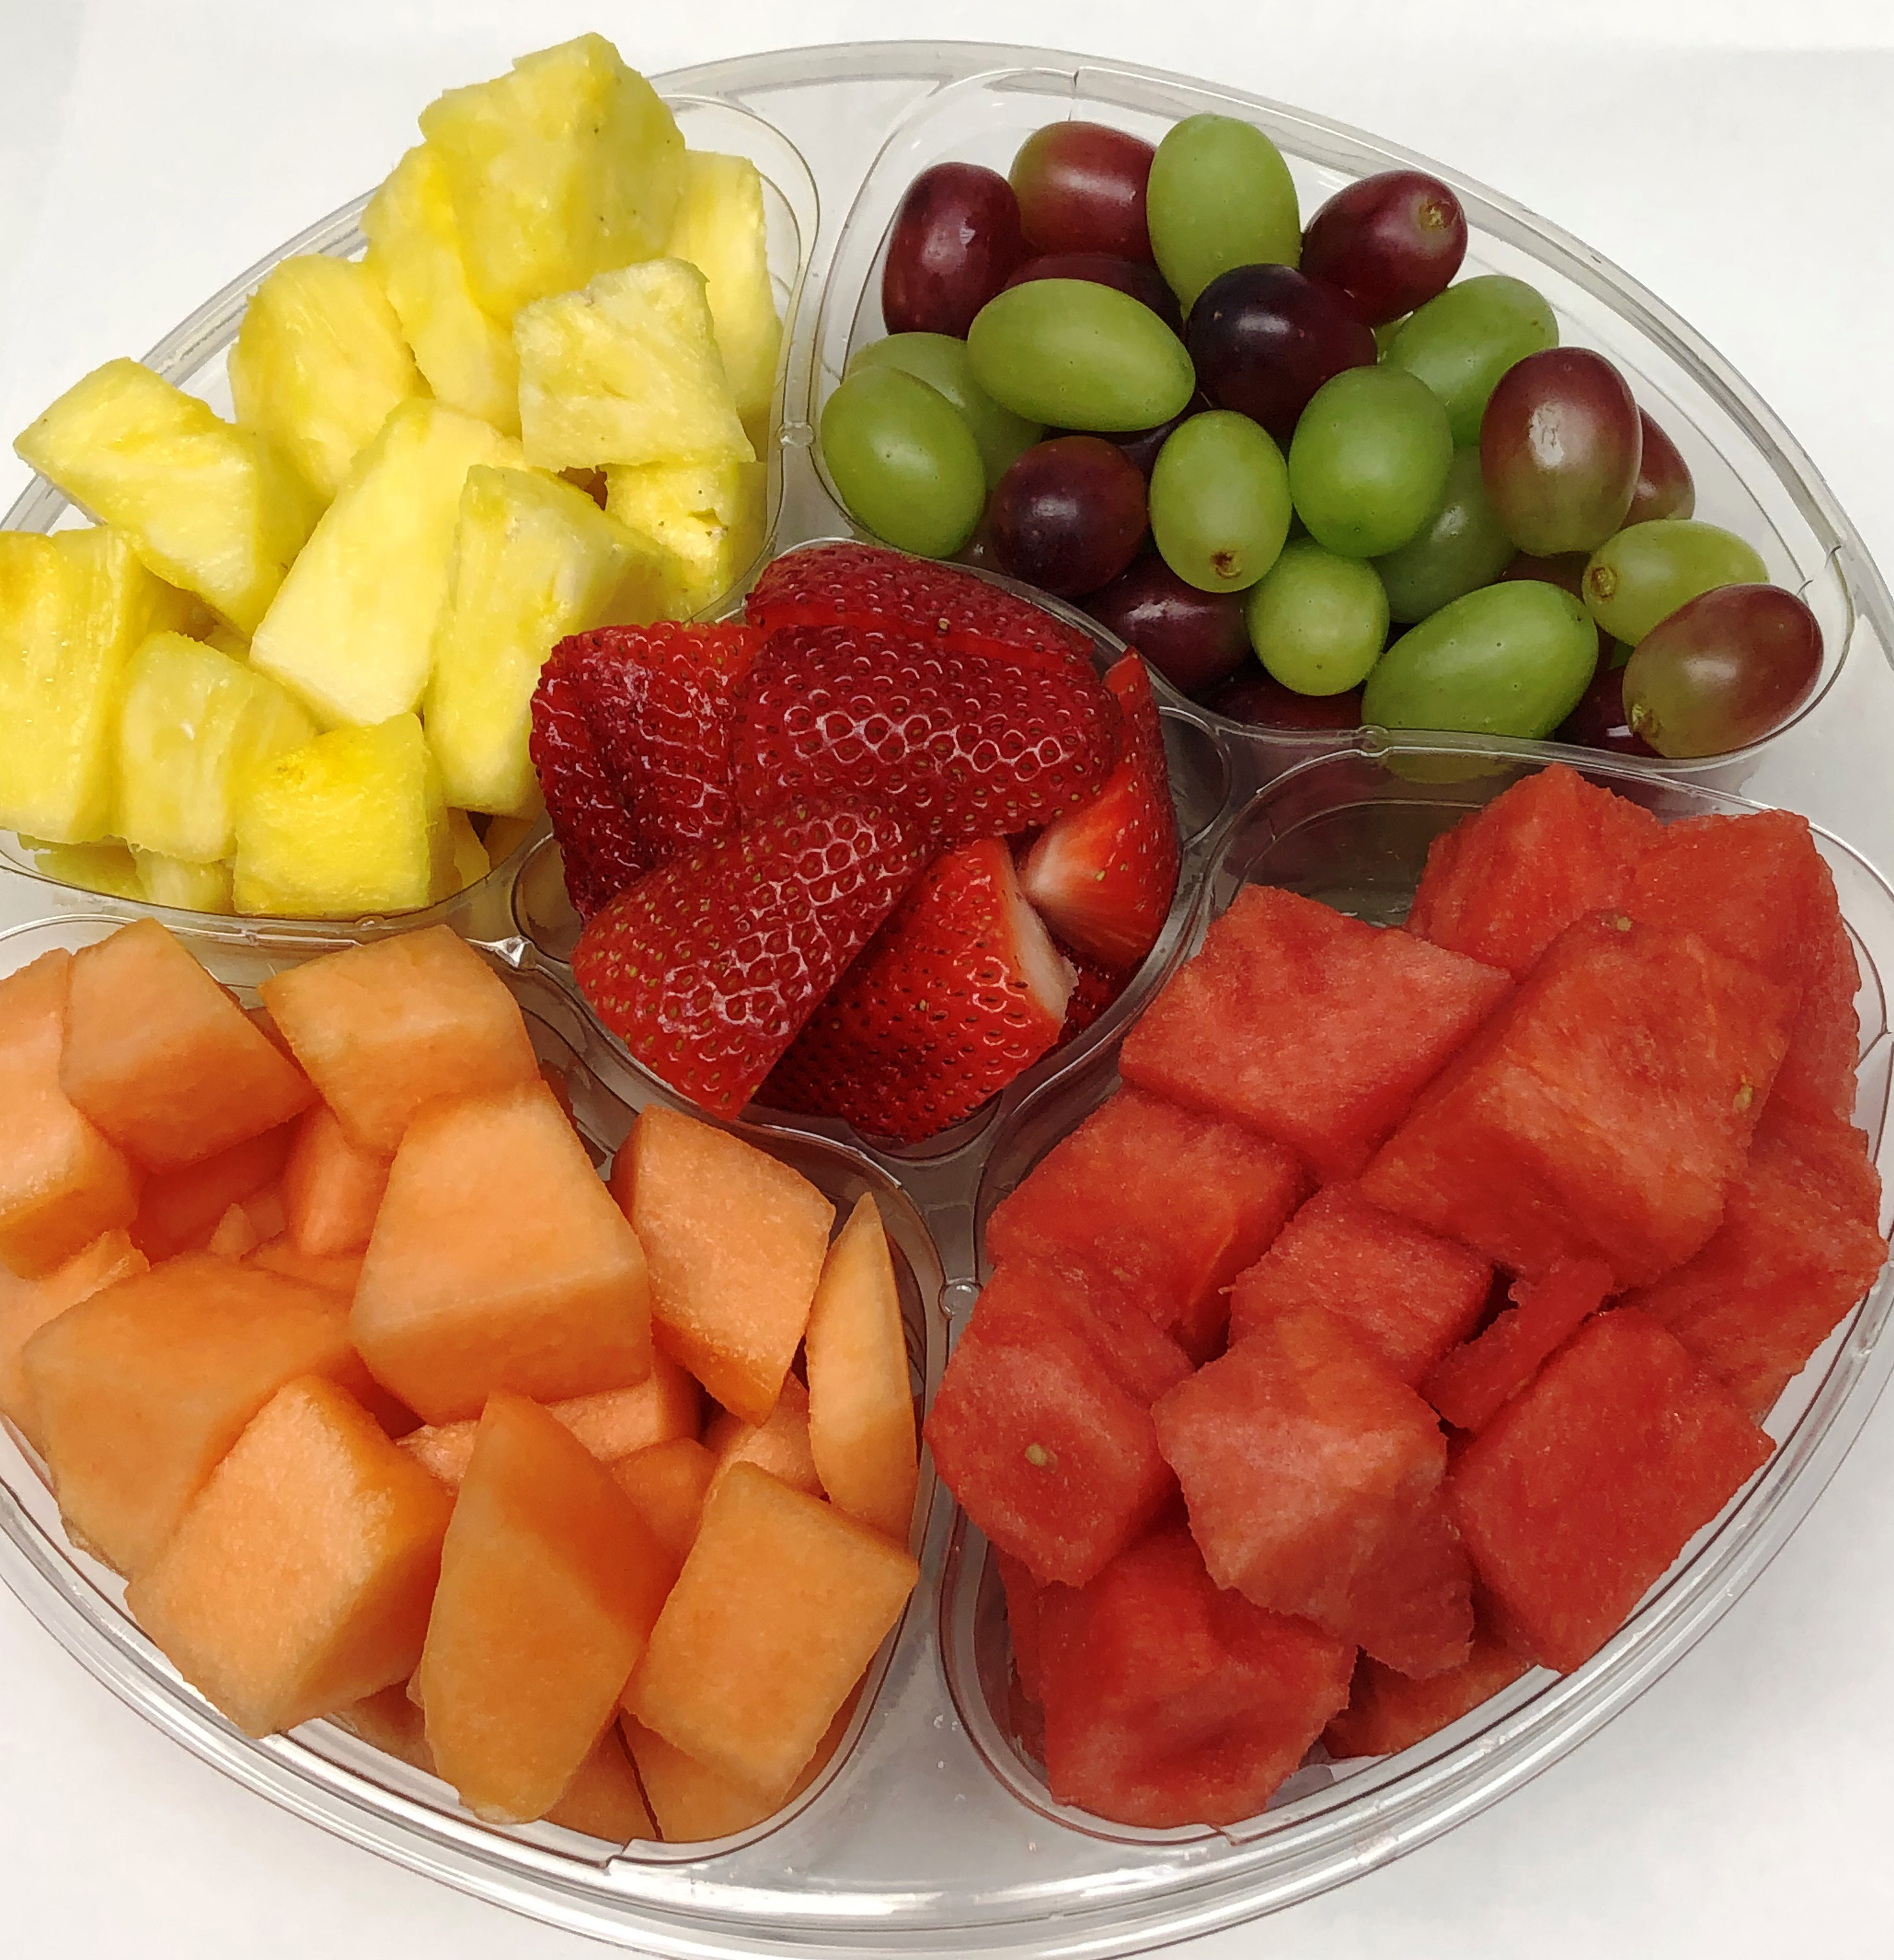 cut fruit tray